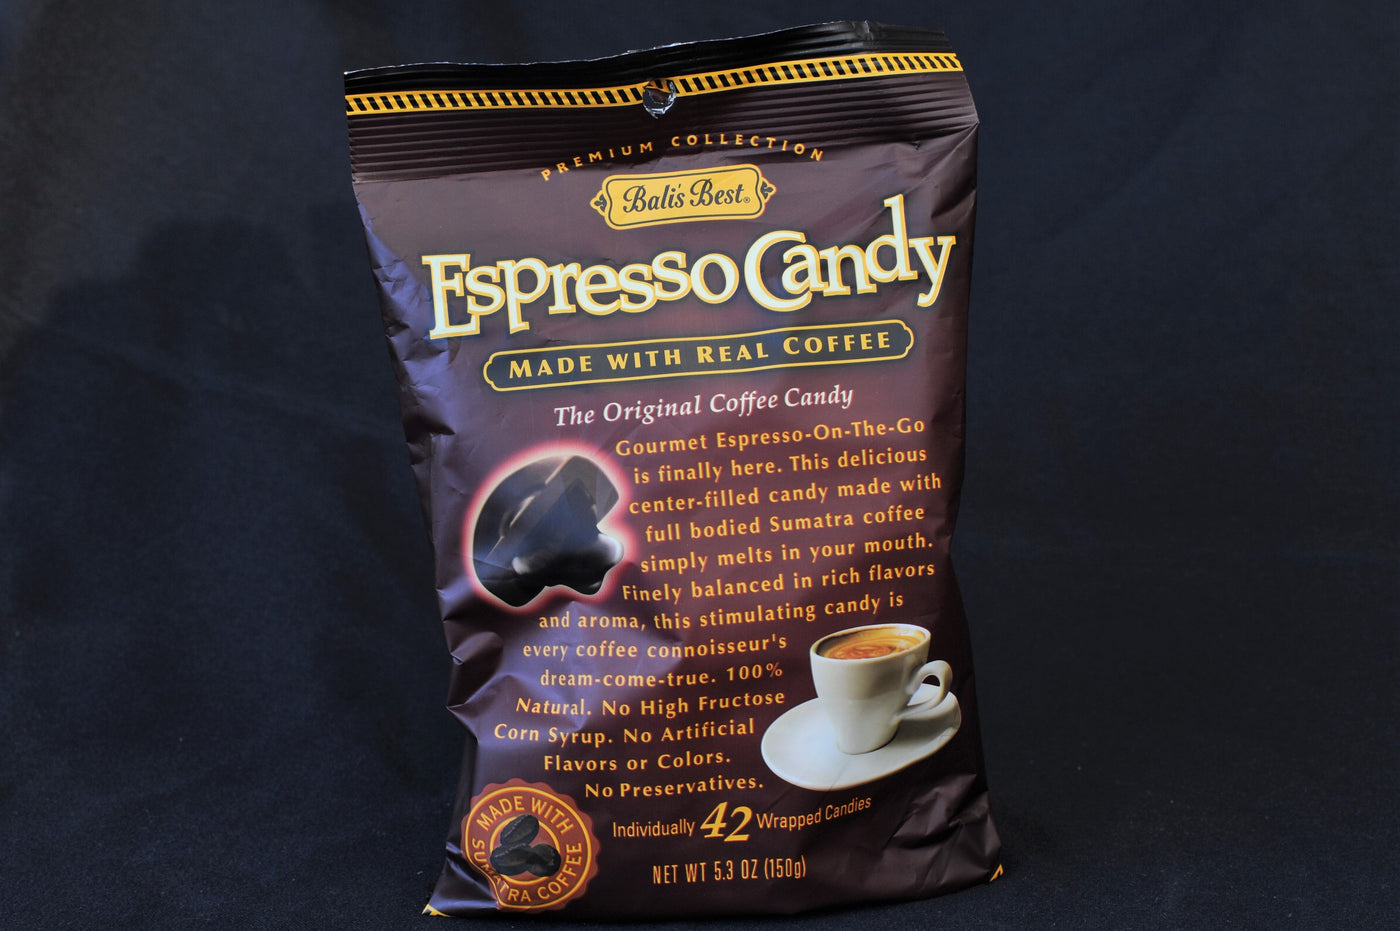 Espresso Candy